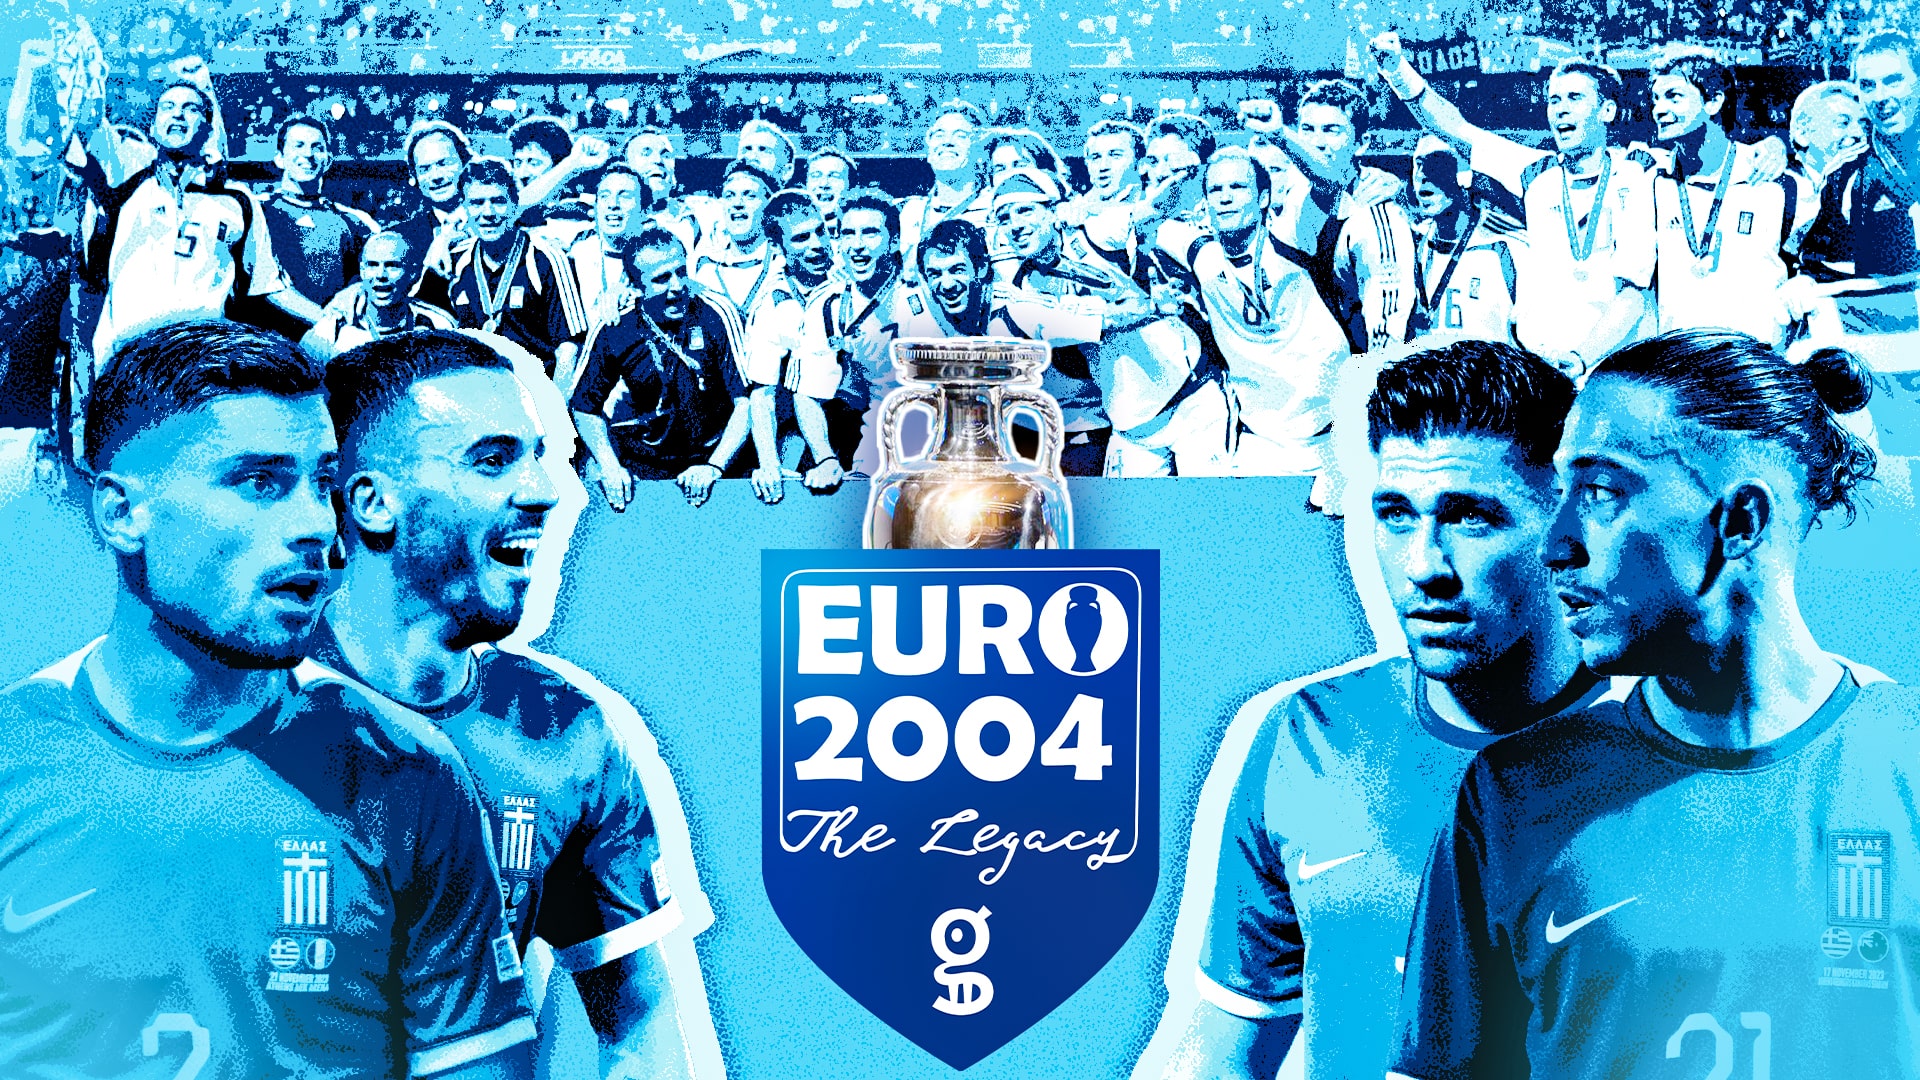  Euro 2004 - The Legacy: Μπακασέτας, Τσιμίκας, Μασούρας και Κουρμπέλης για το «θαύμα» της Ελλάδας!